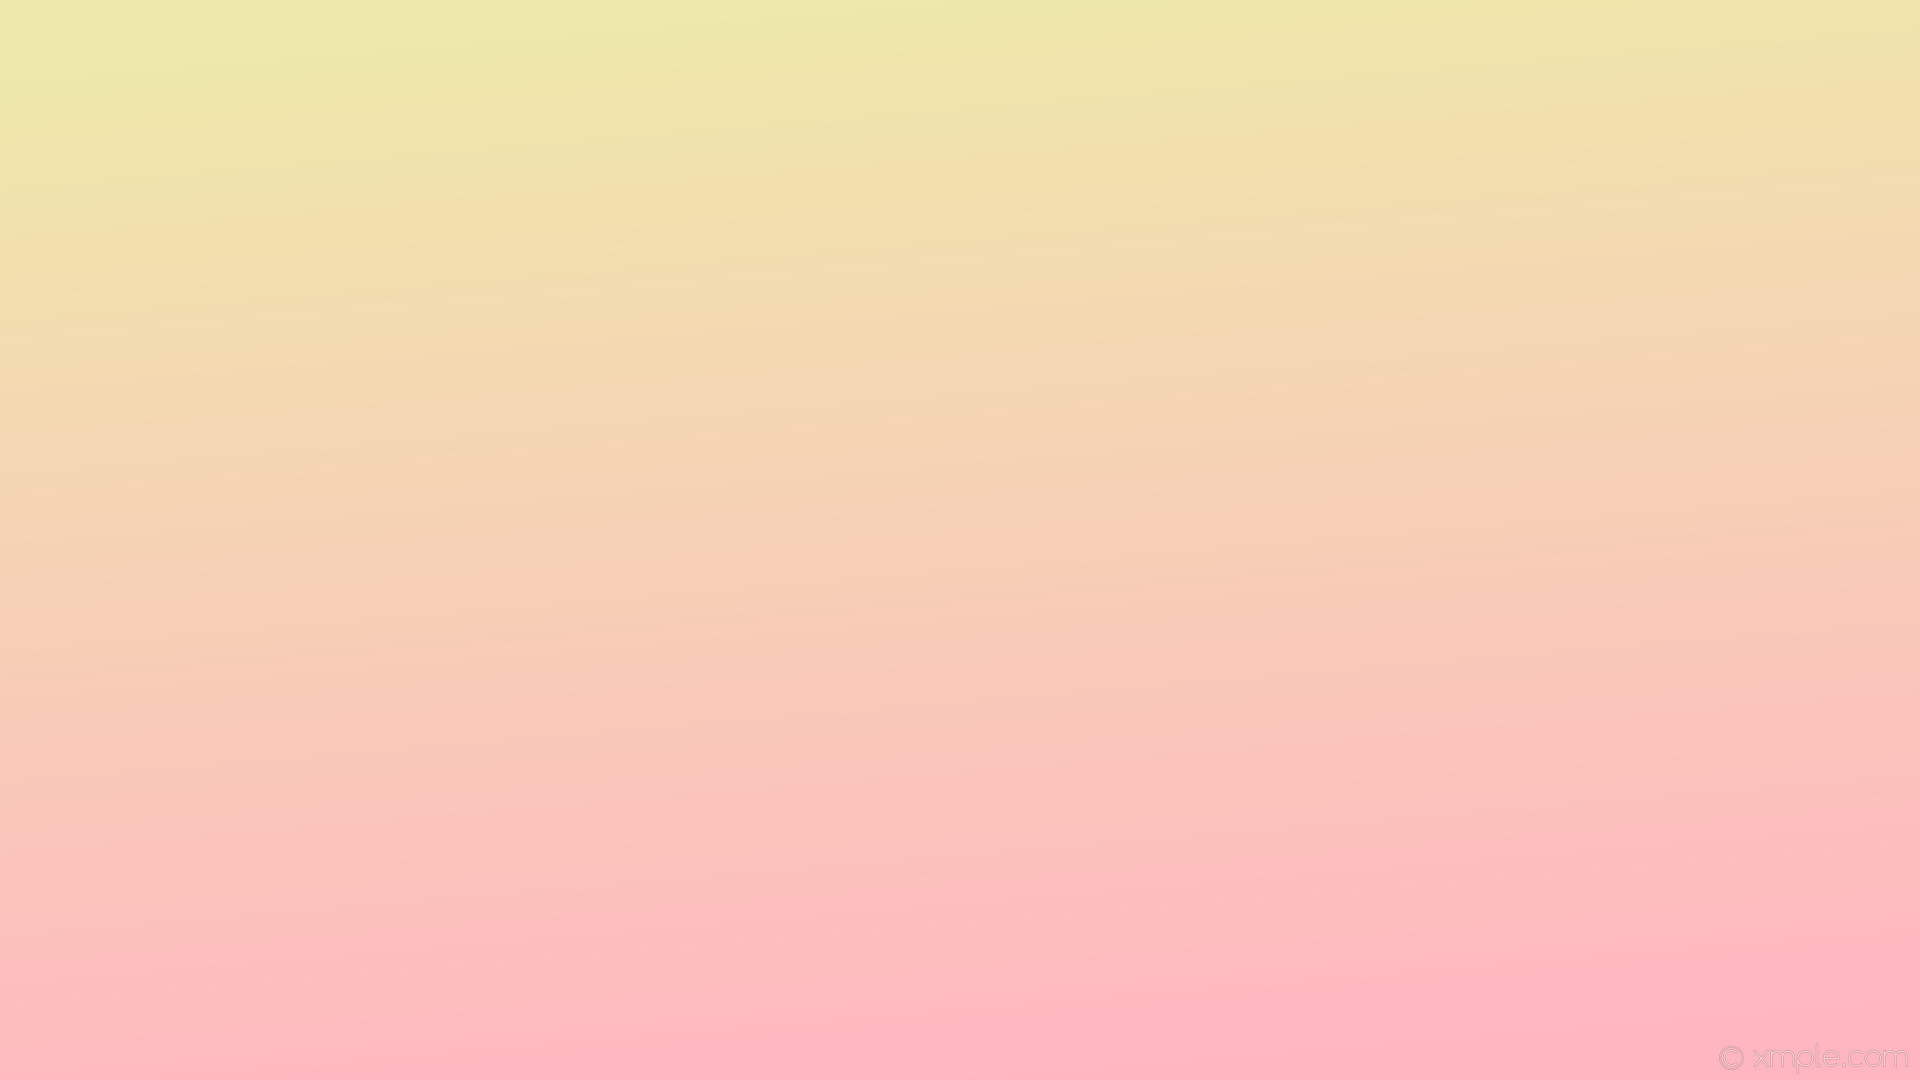 1920x1080 wallpaper pink yellow gradient linear pale goldenrod light pink #eee8aa  #ffb6c1 105Â°